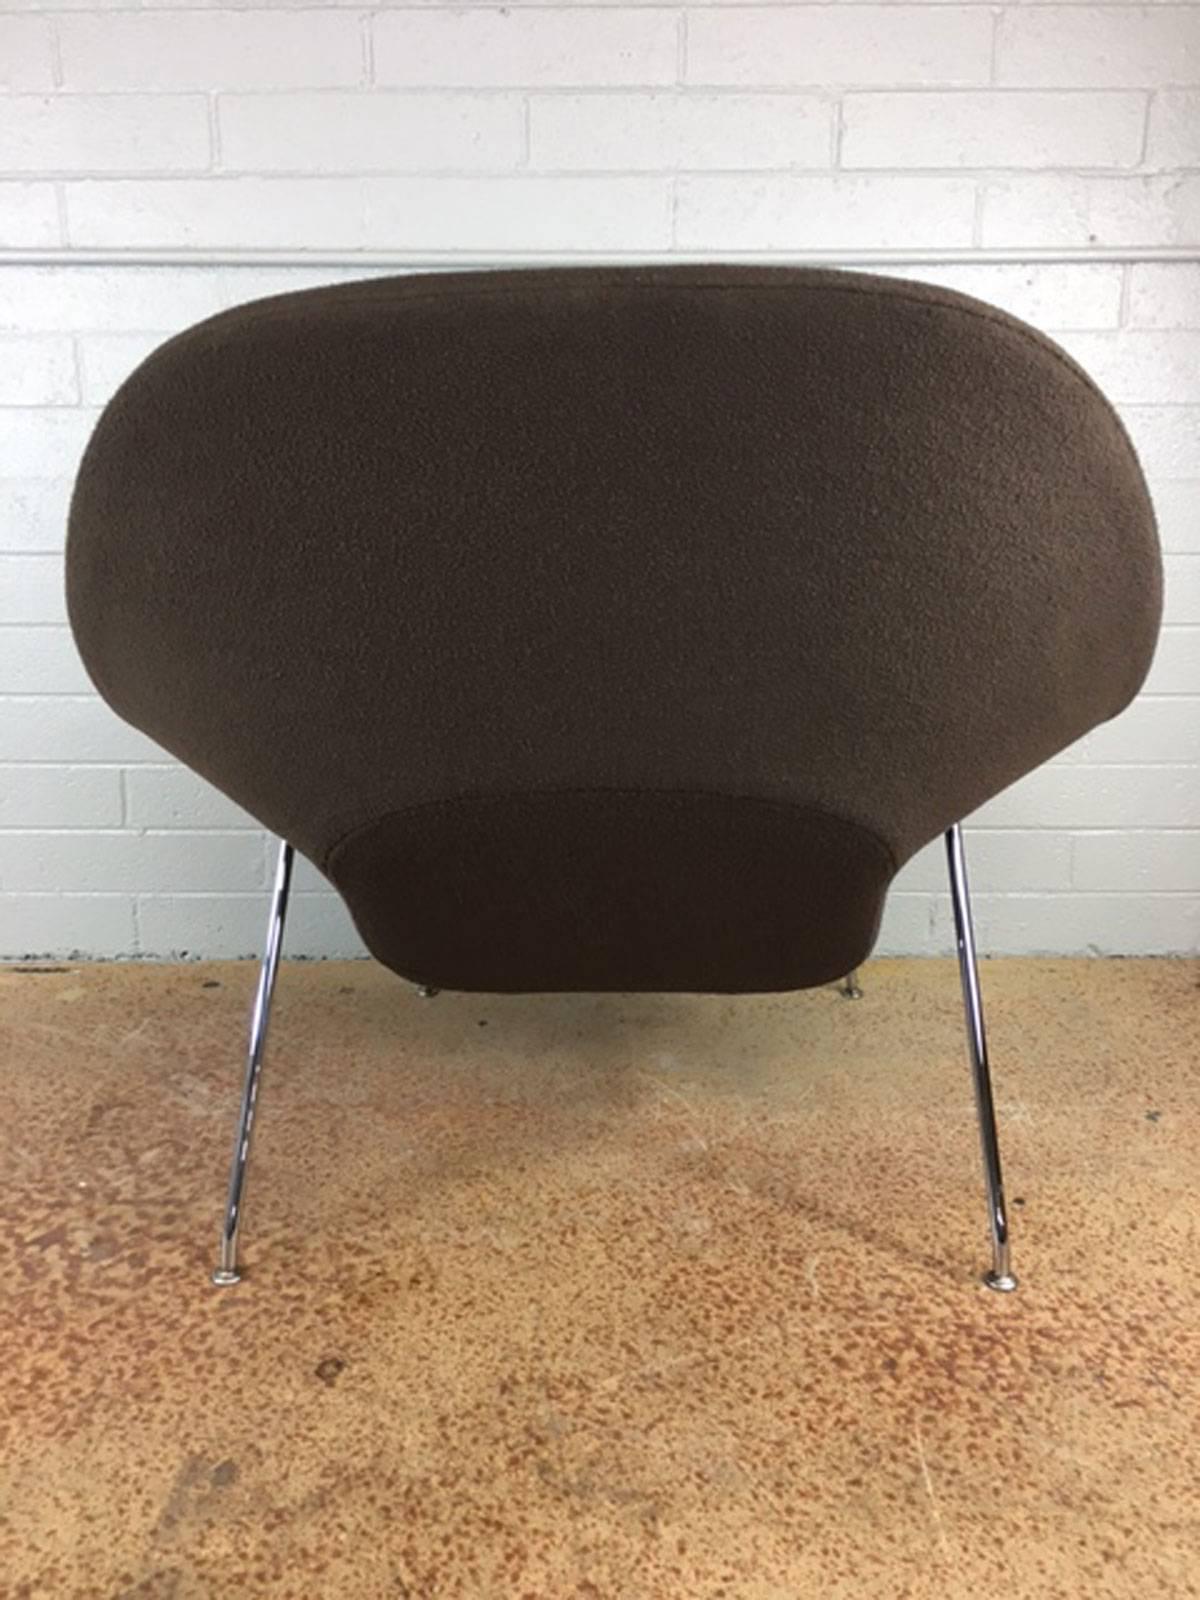 American Eero Saarinen Womb Chair by Knoll - 1 Available 